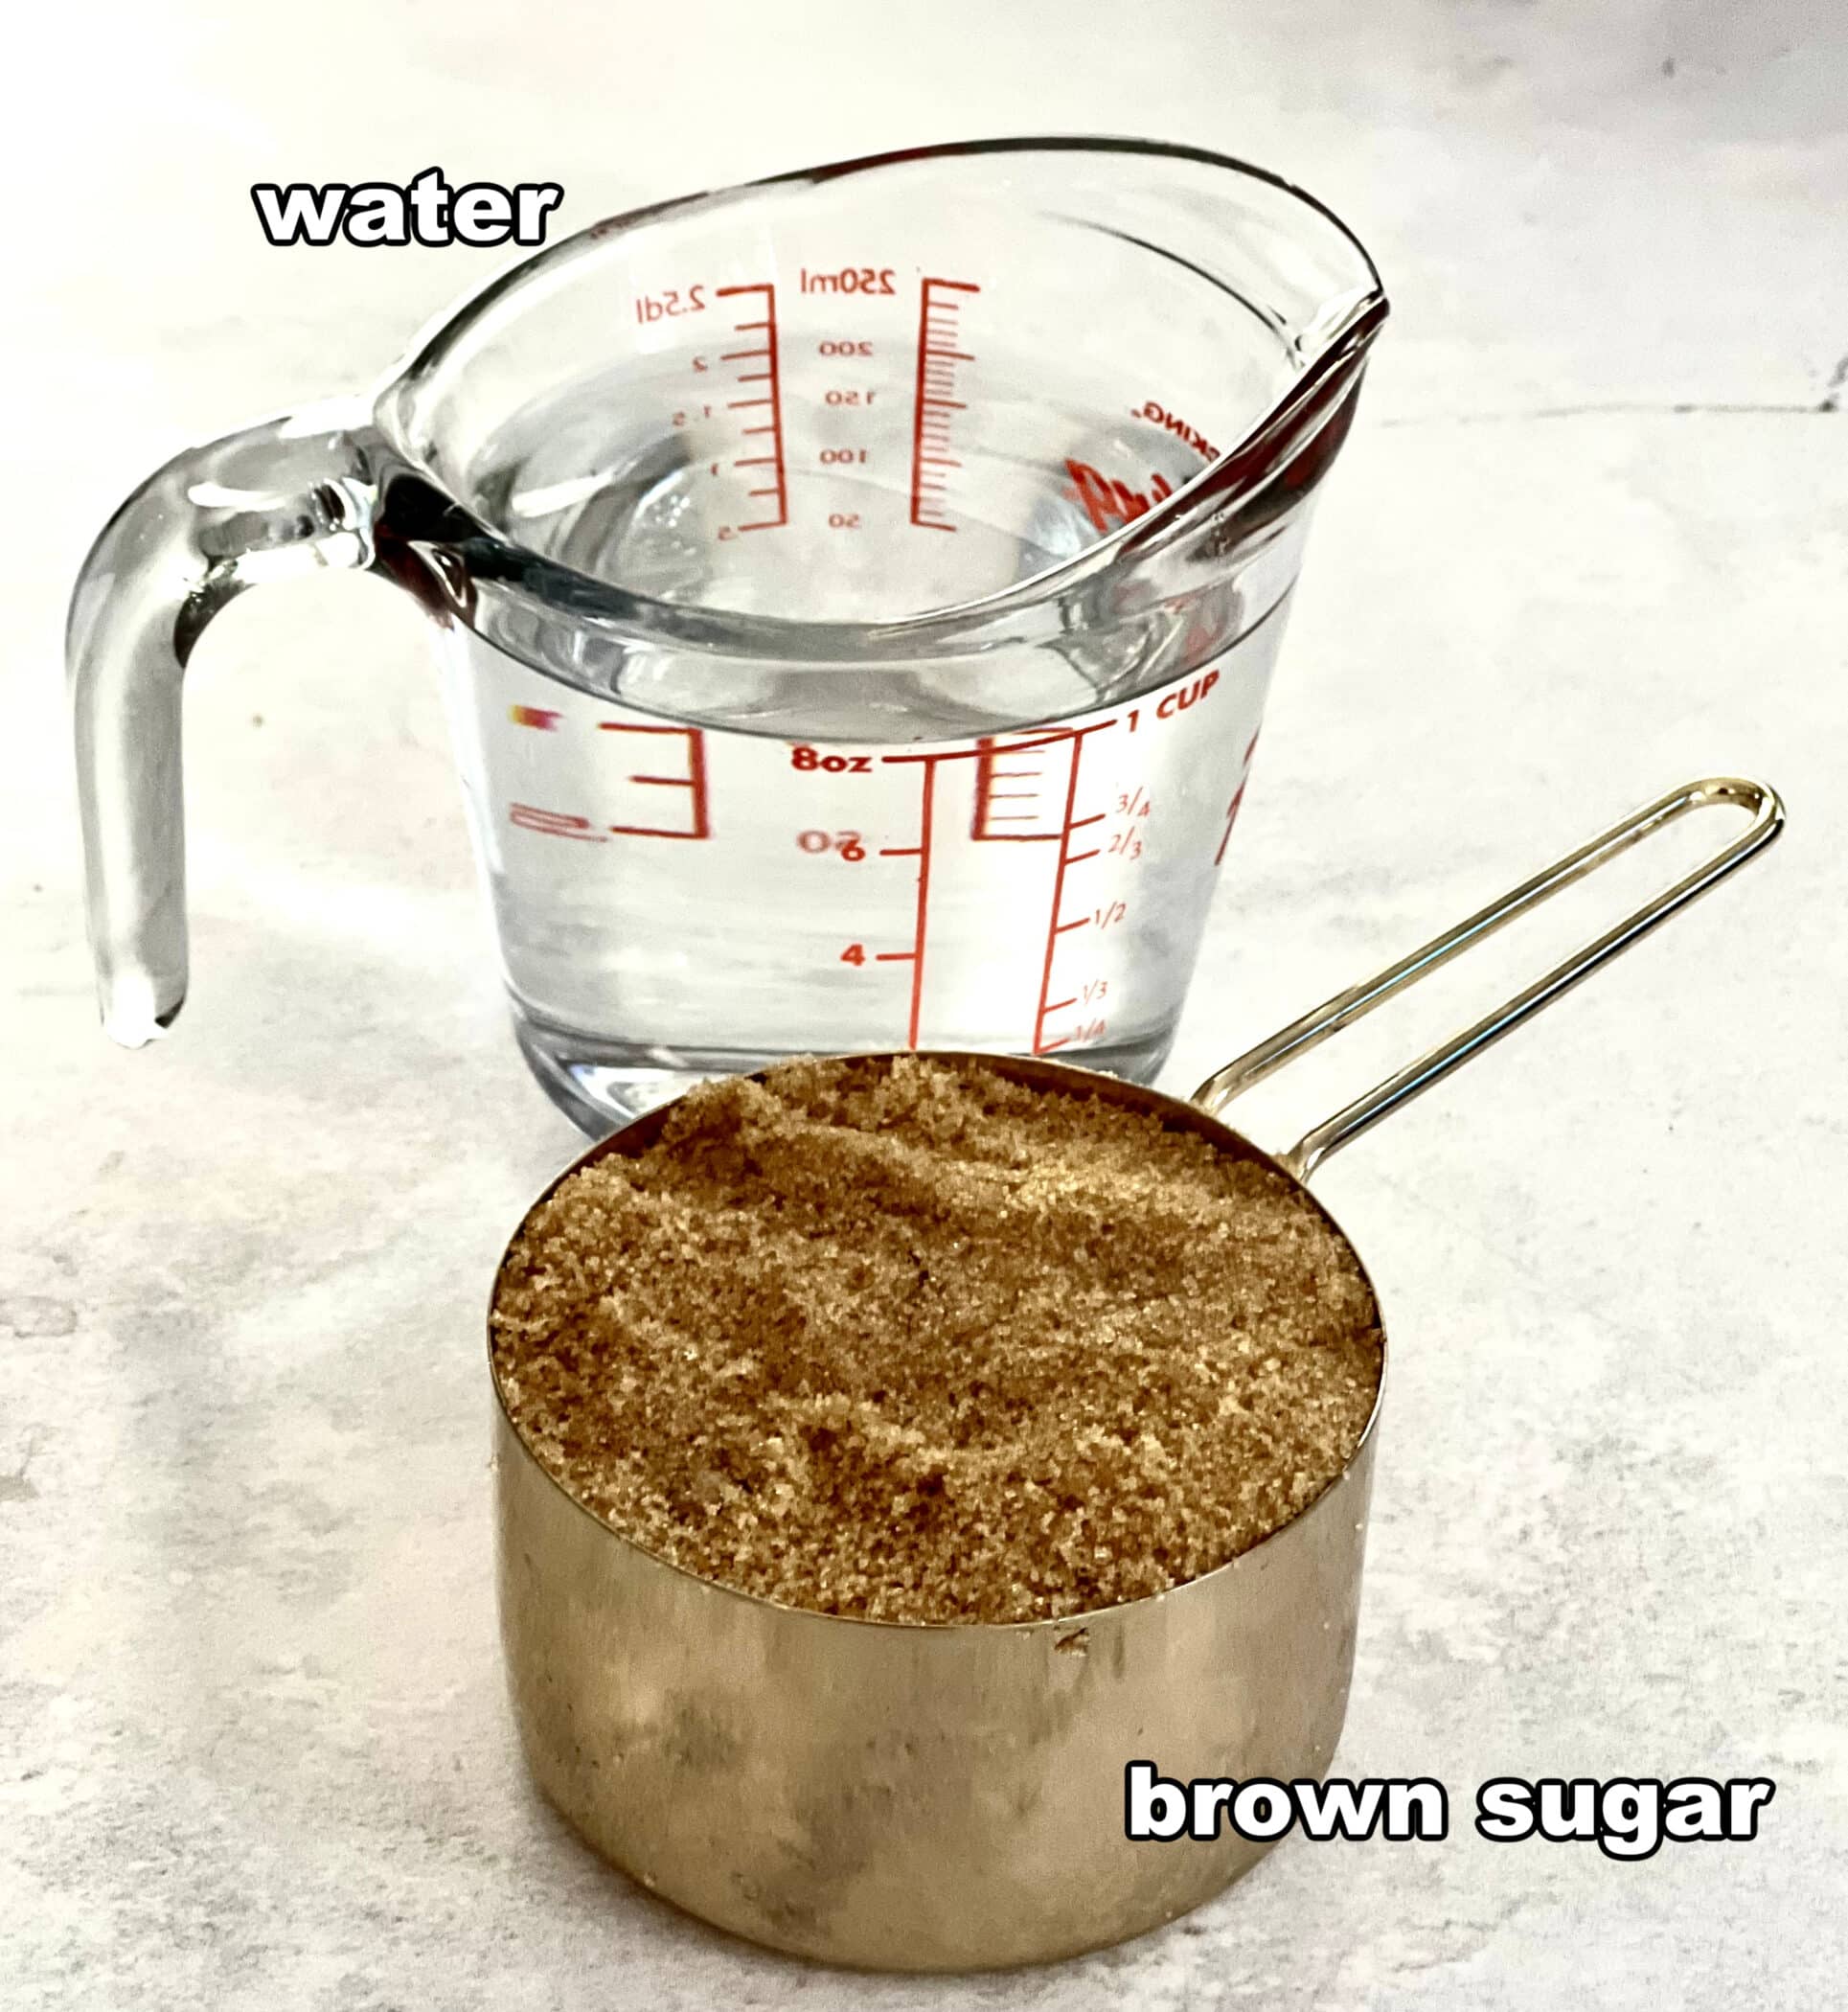 water and brown sugar